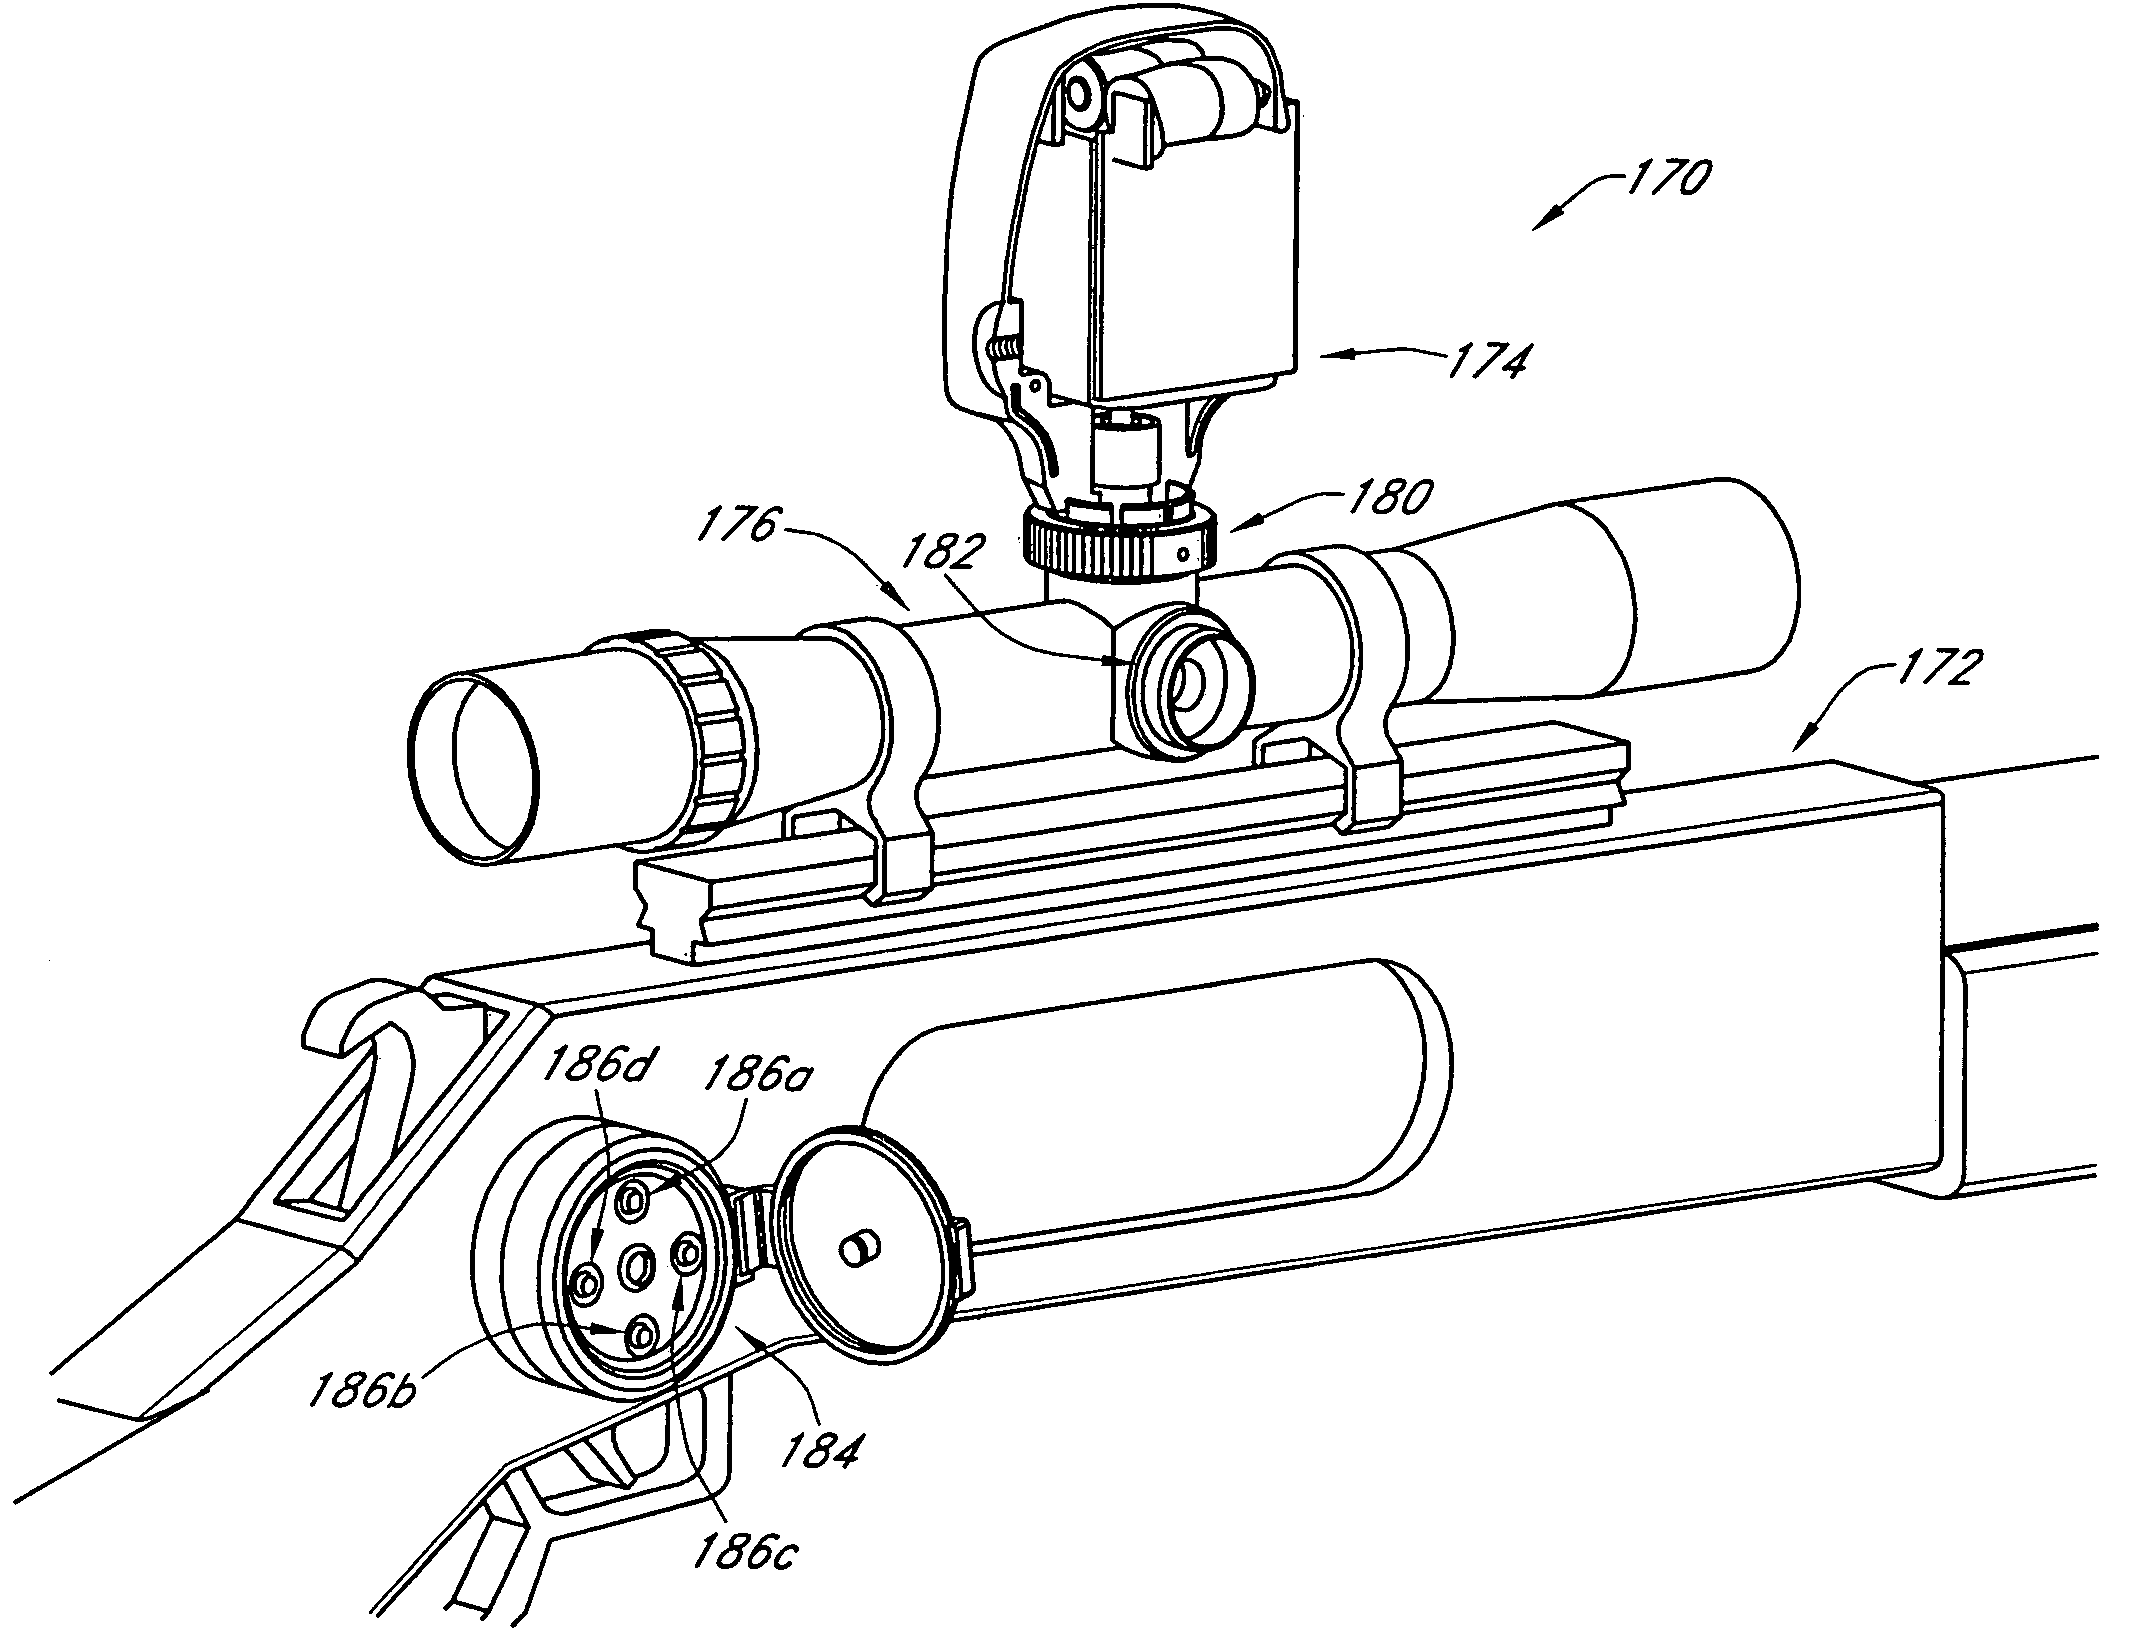 Scope adjustment method and apparatus